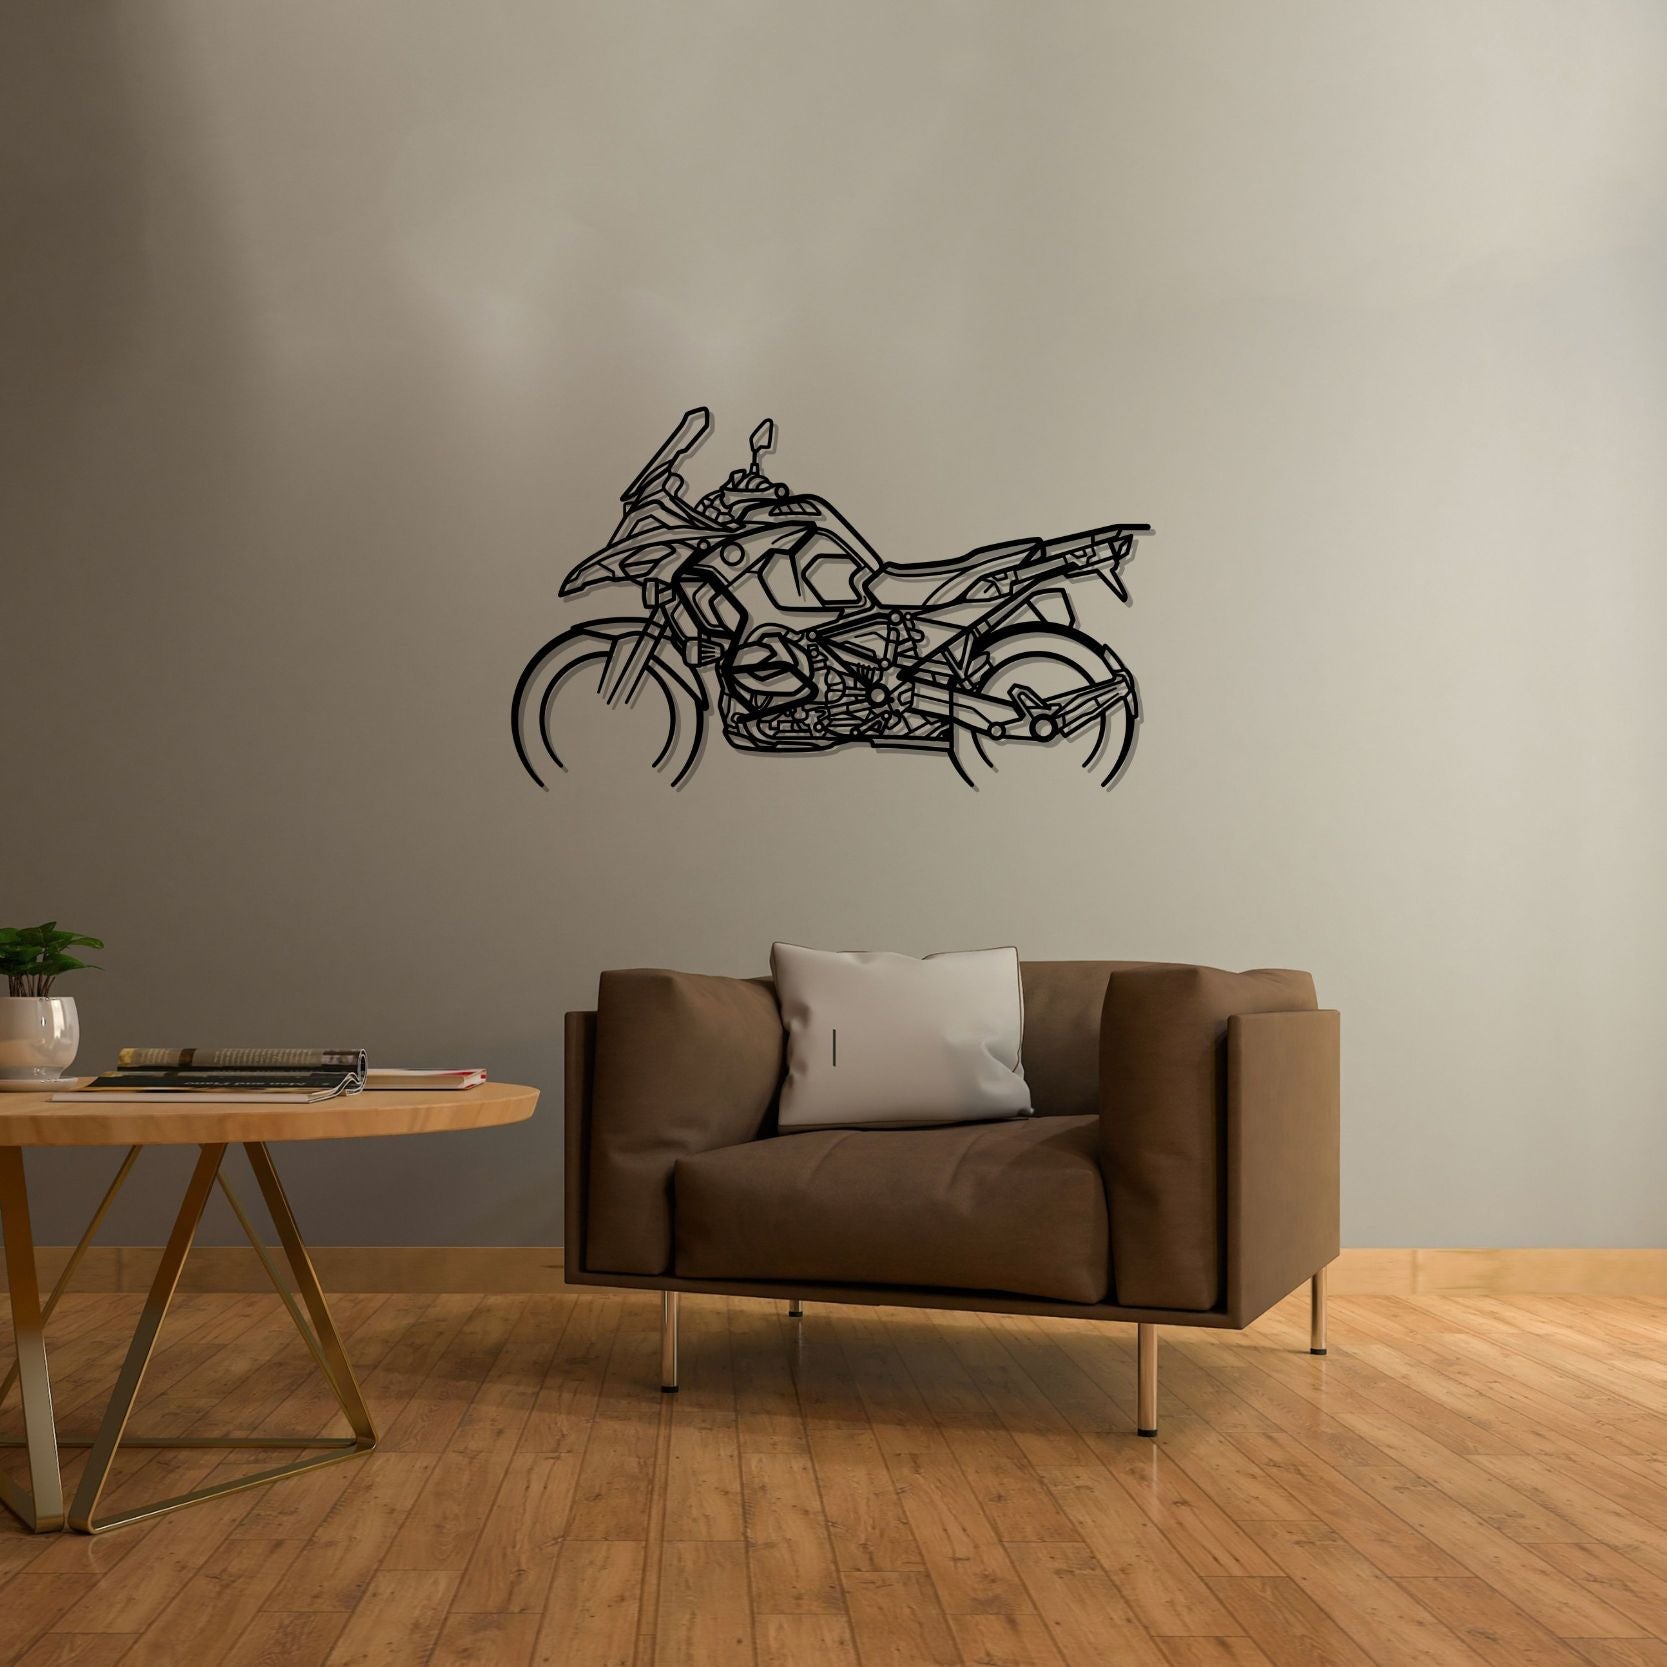 Motorcycle Metal Signs - Motorcycle Wall Art - Metal Signs For Garage - Garage Decorations